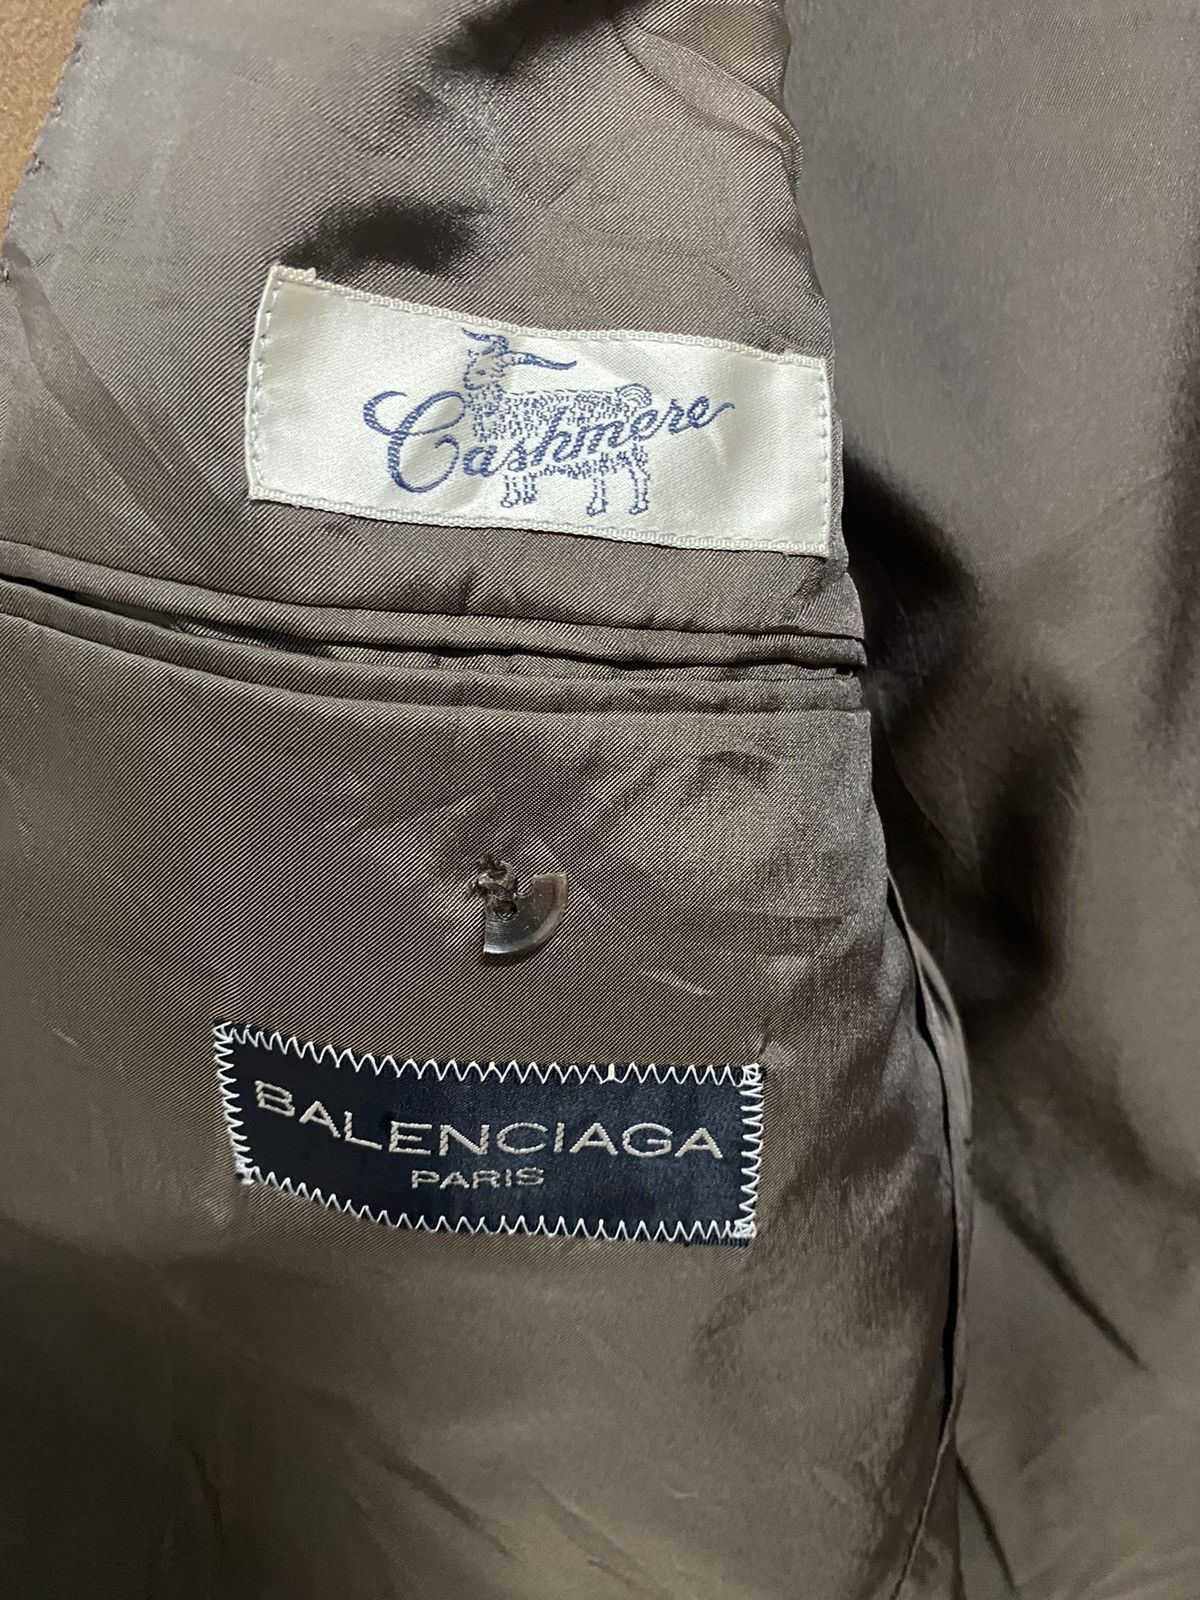 Vintage Balenciaga Cashmere Blazer Suit Jacket - 8